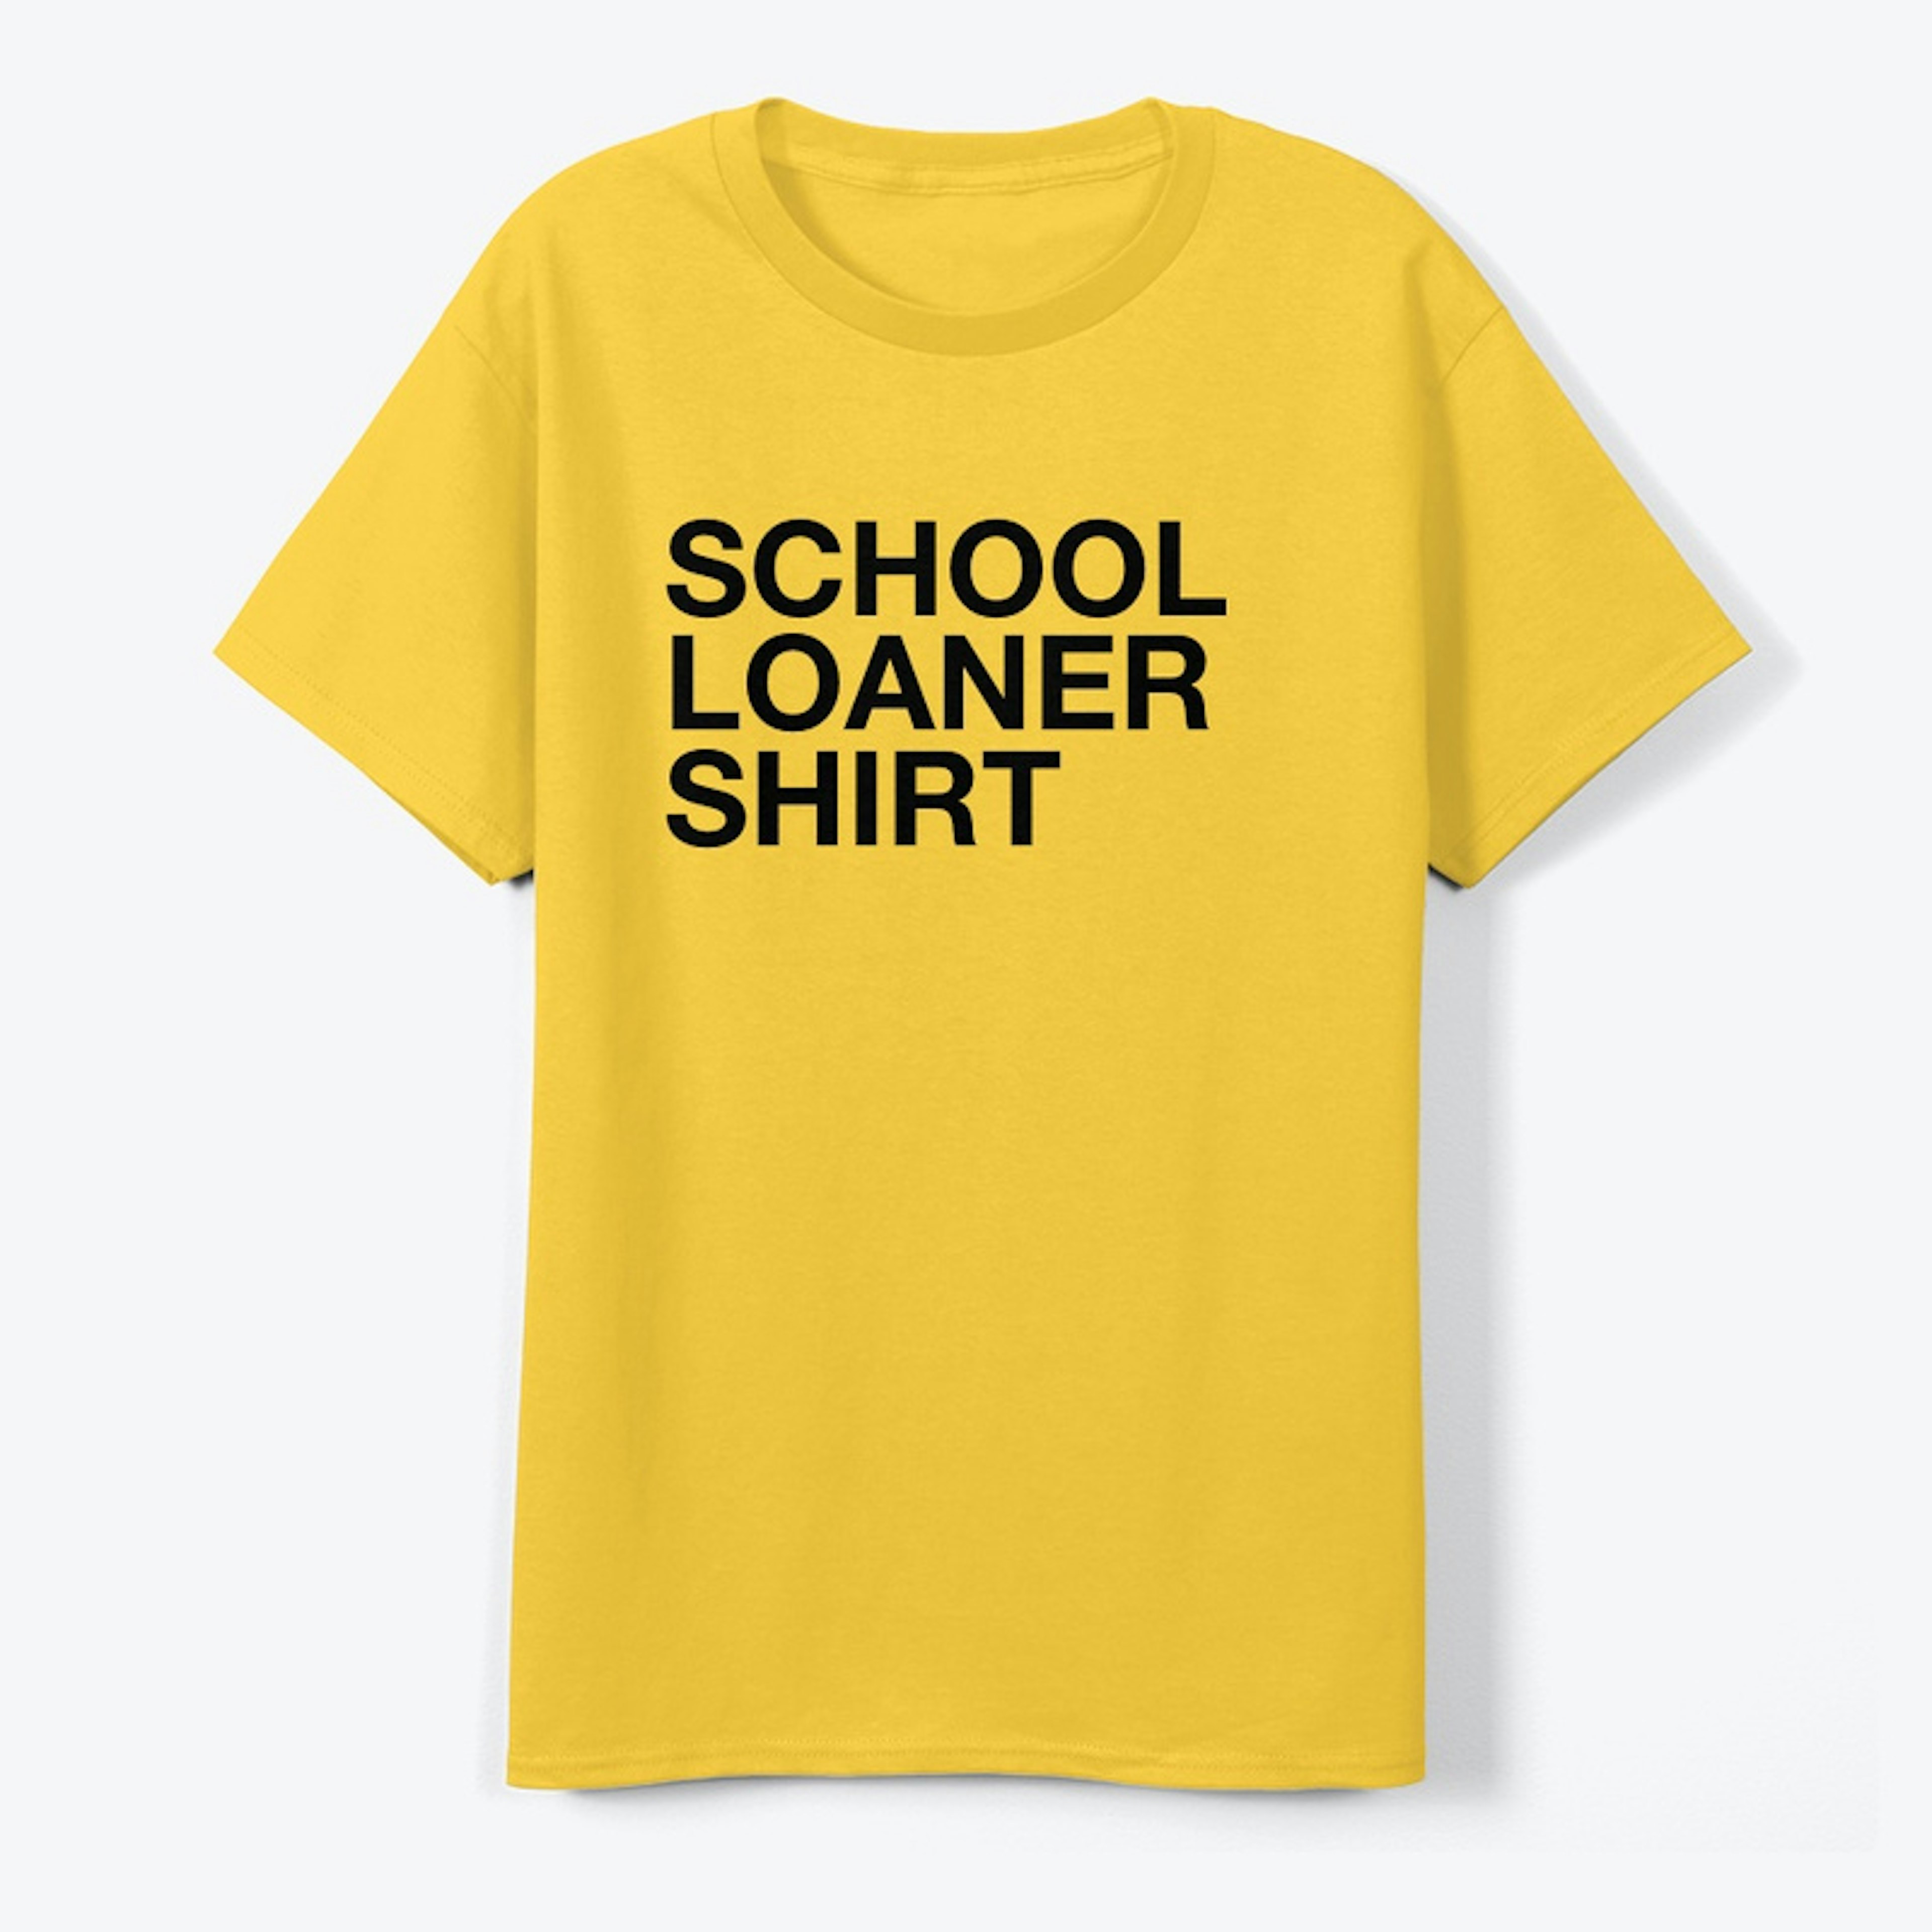 SCHOOL LOANER SHIRT